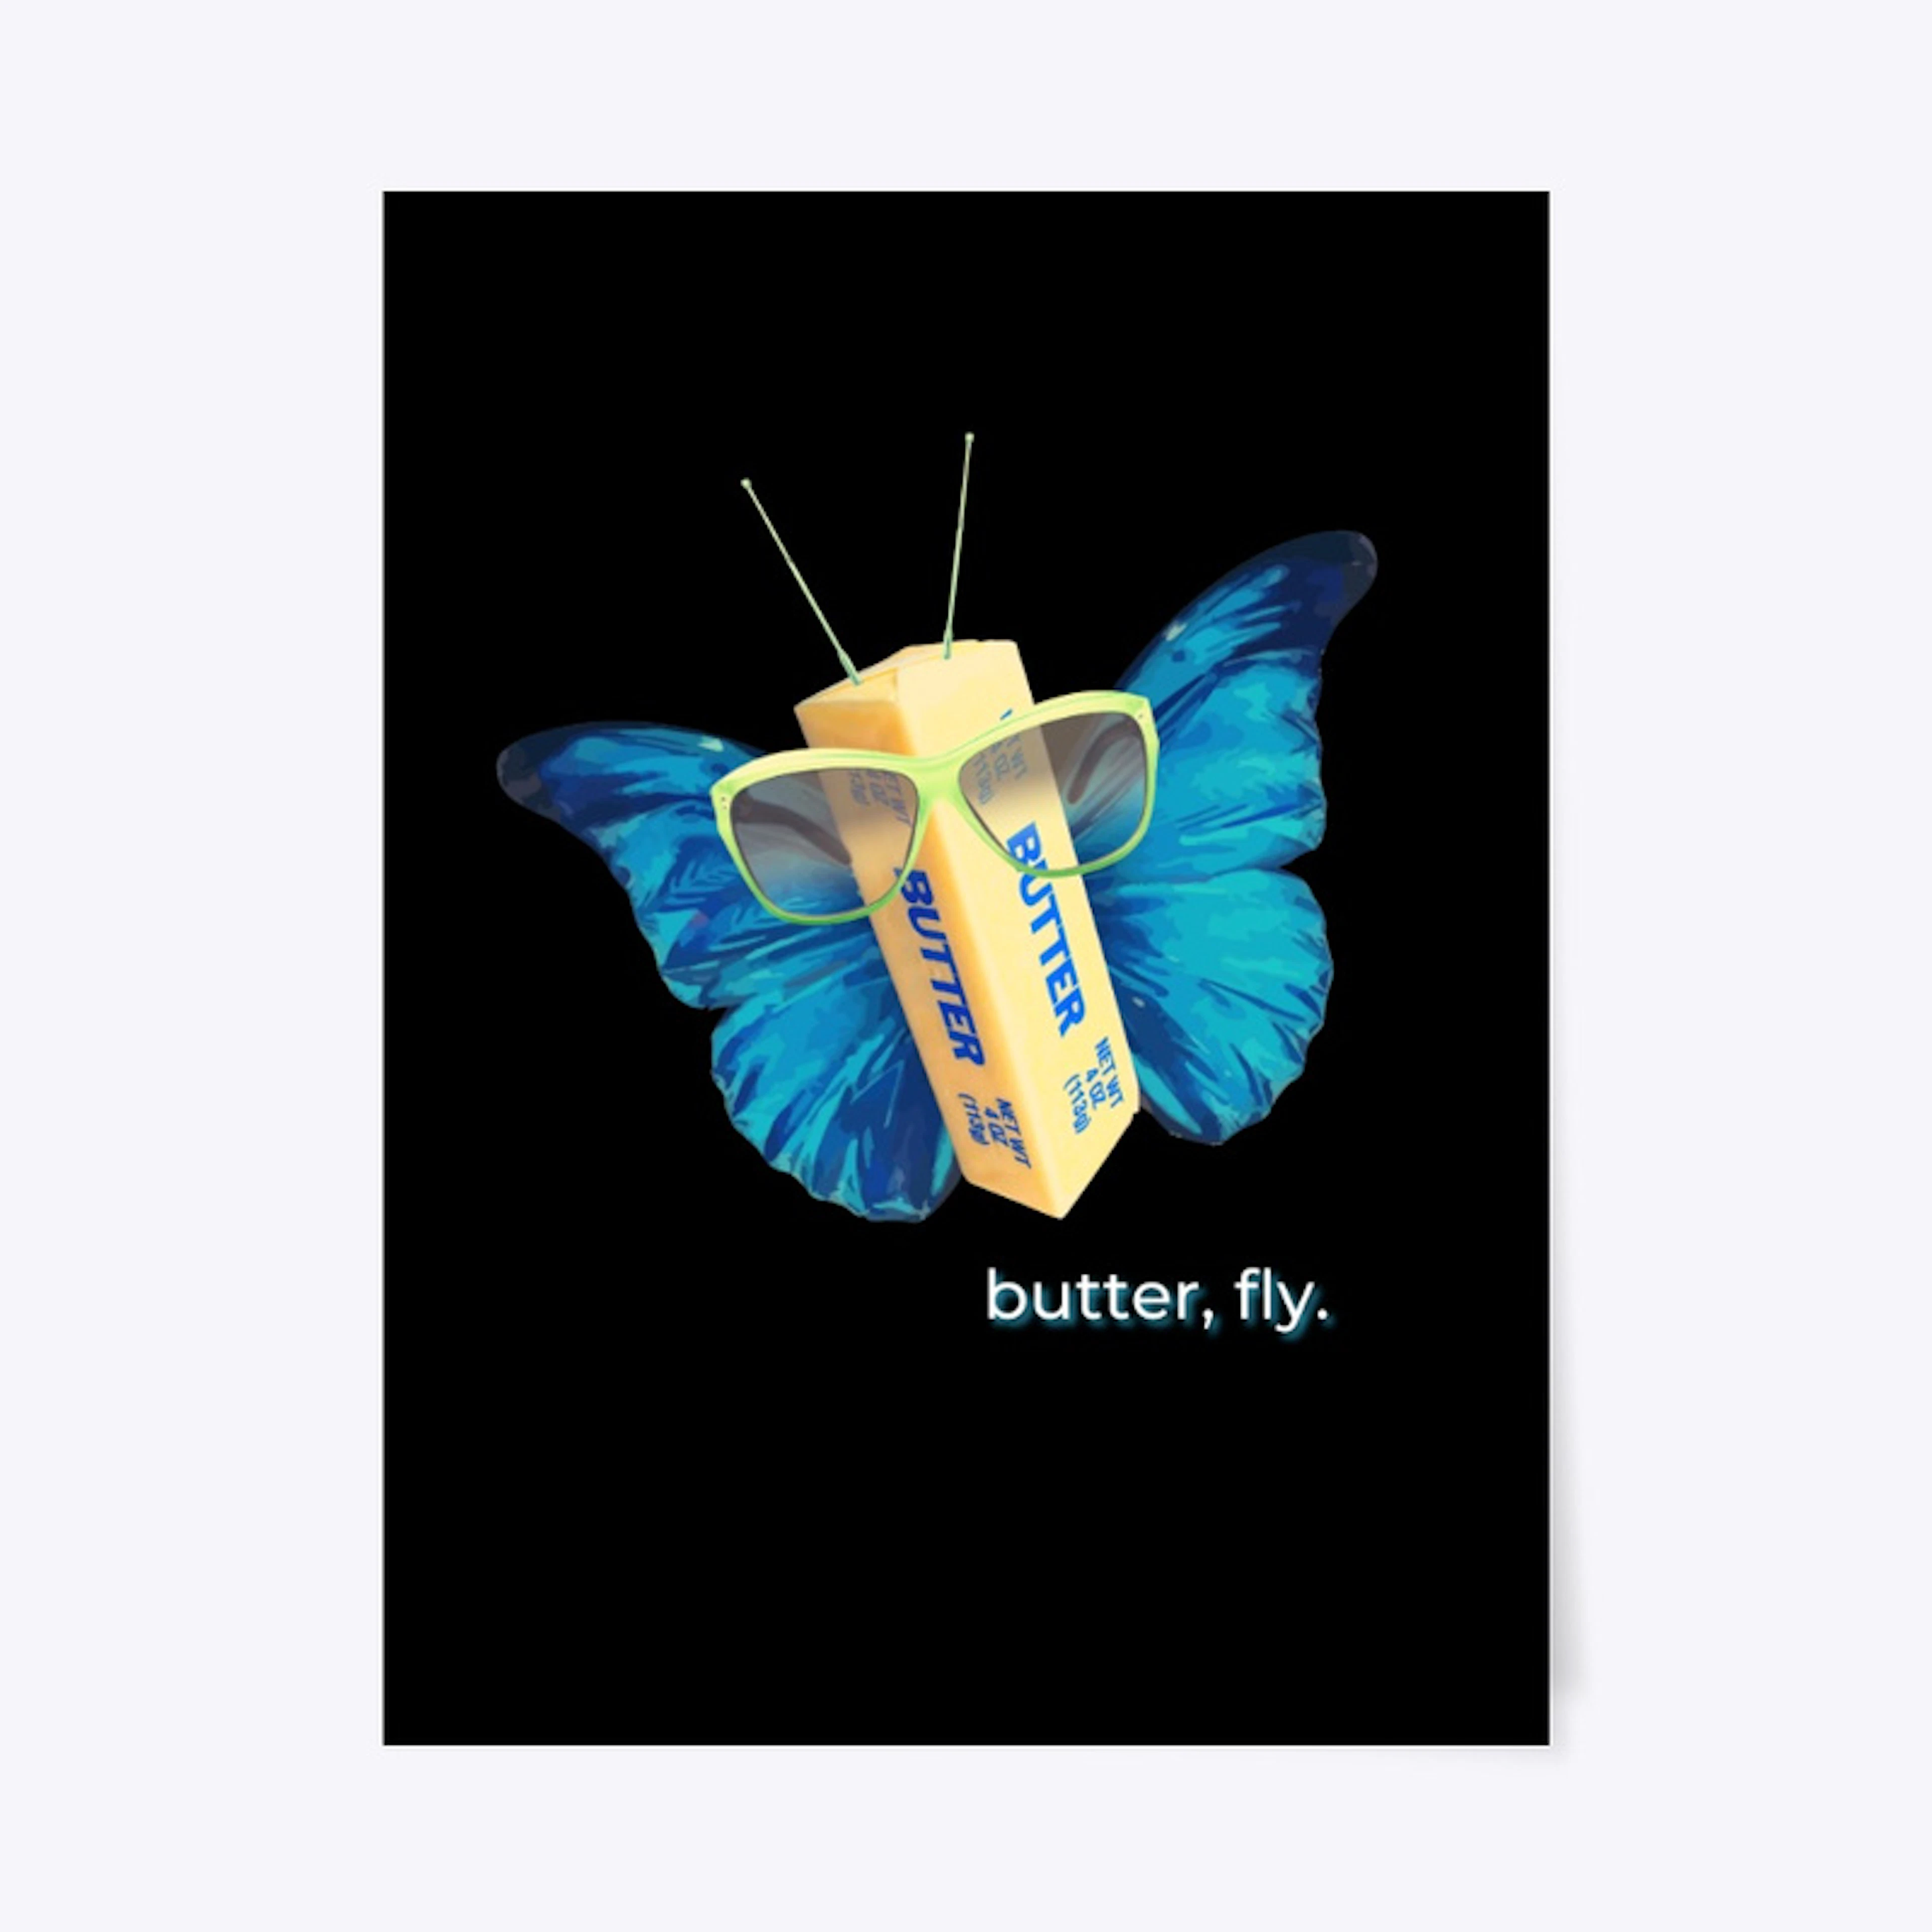 Butter, fly